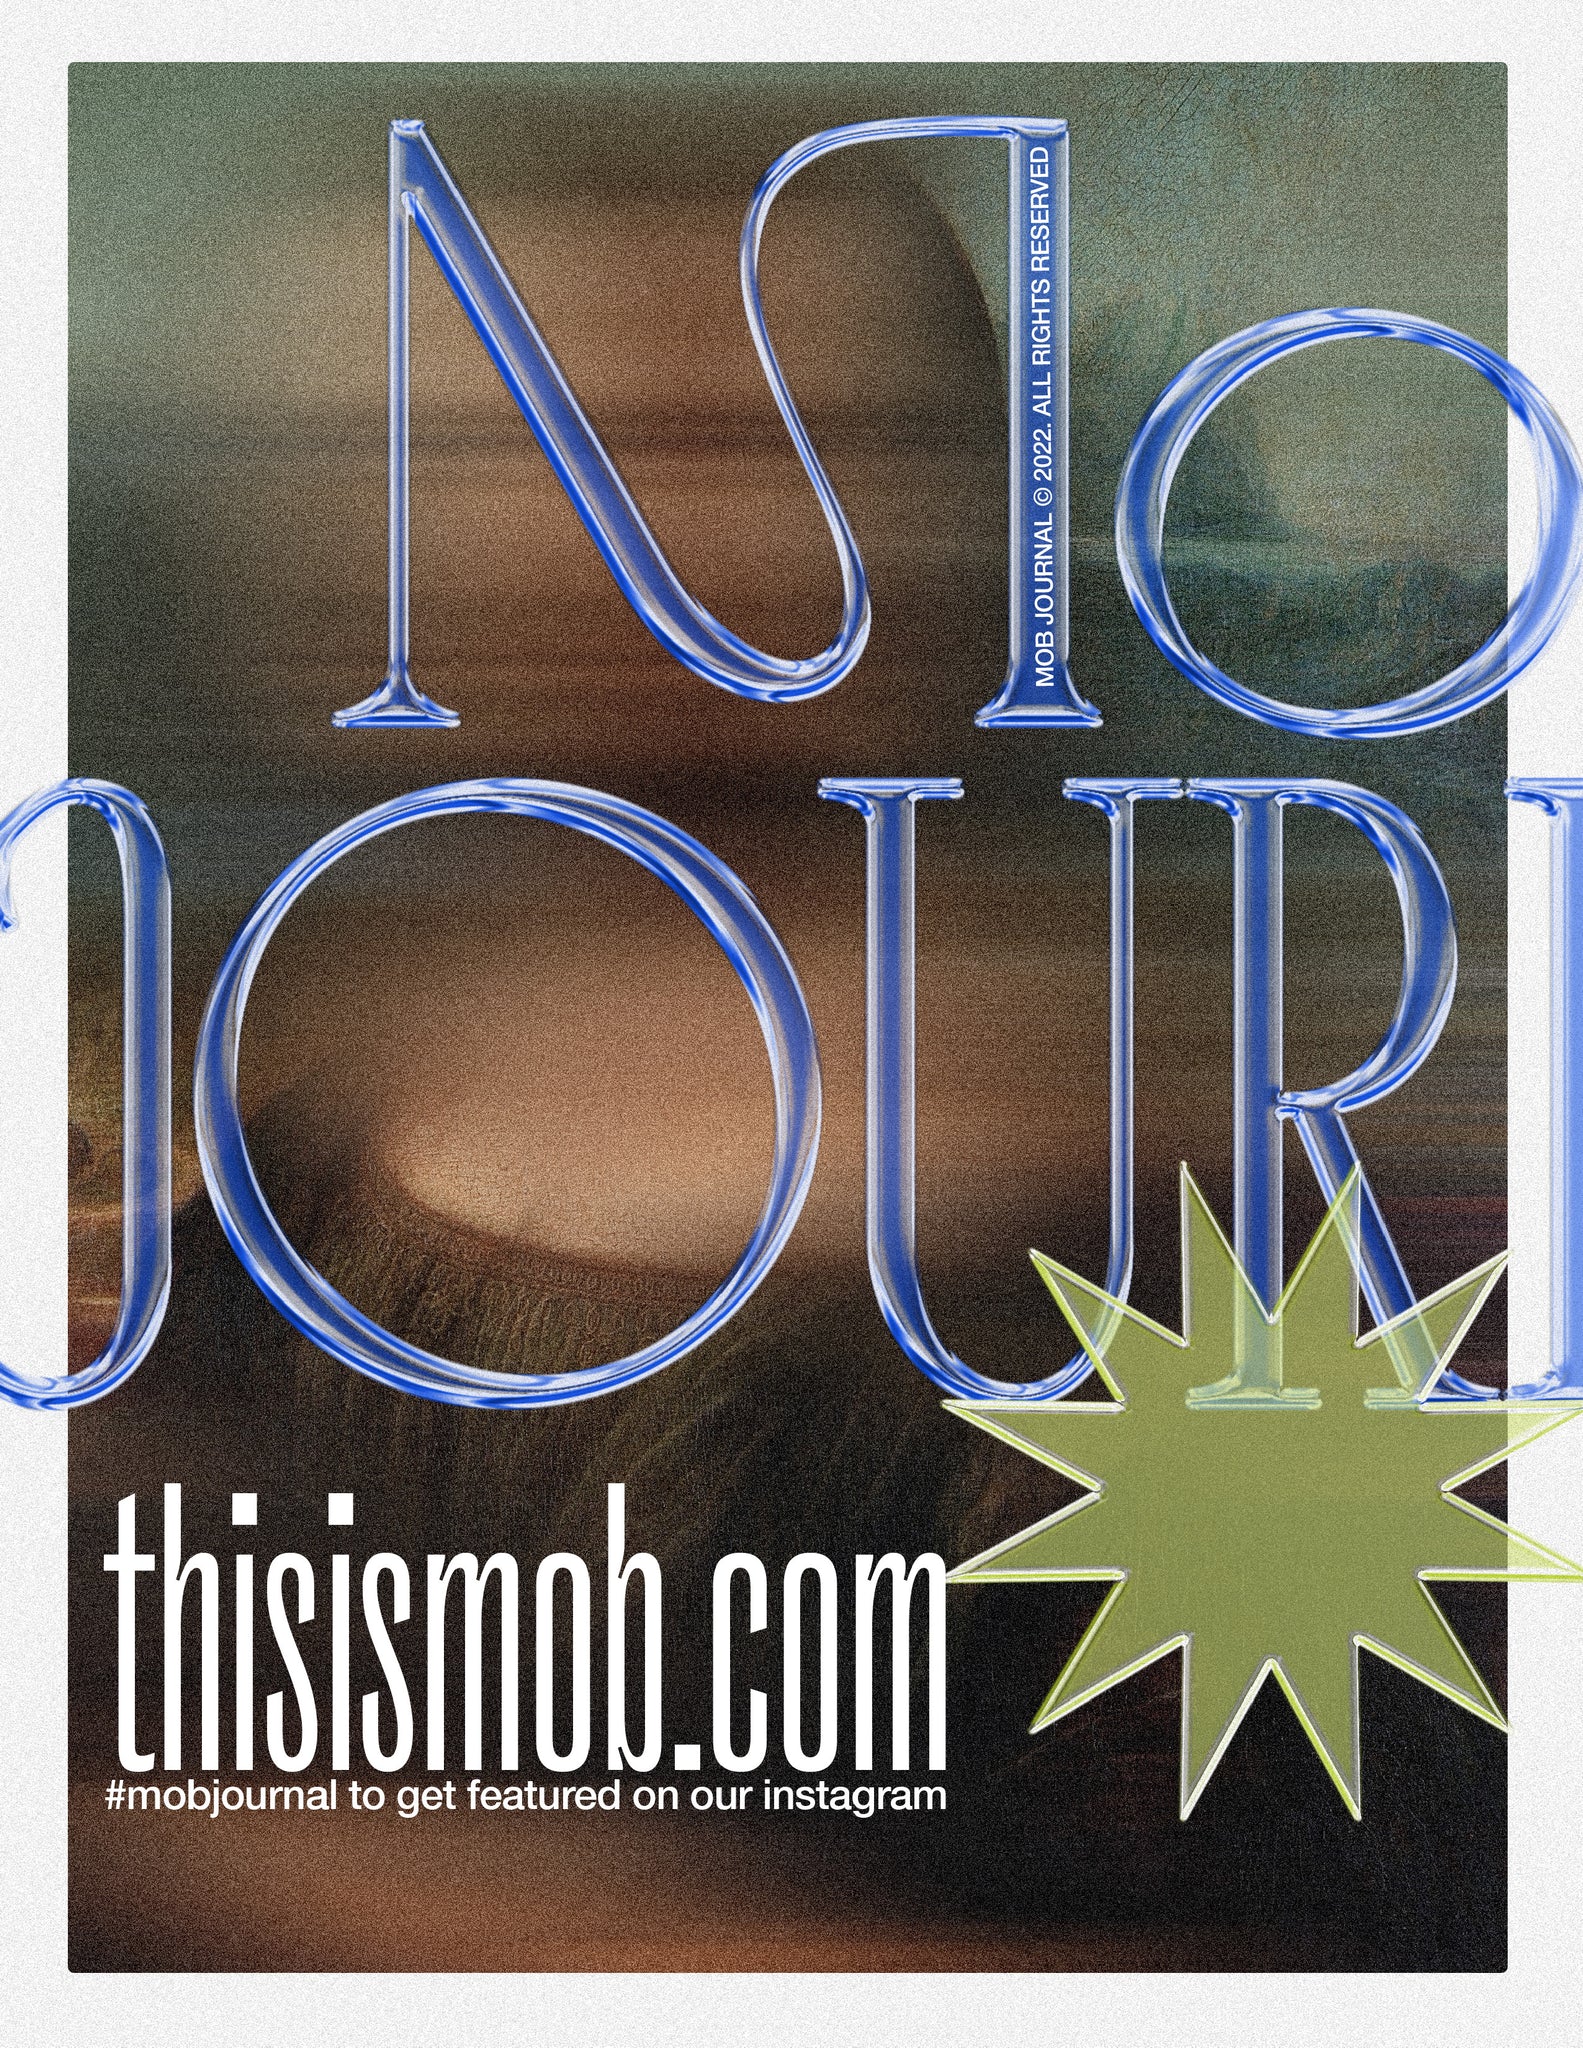 MOB JOURNAL | VOLUME THIRTY NINE| ISSUE #23